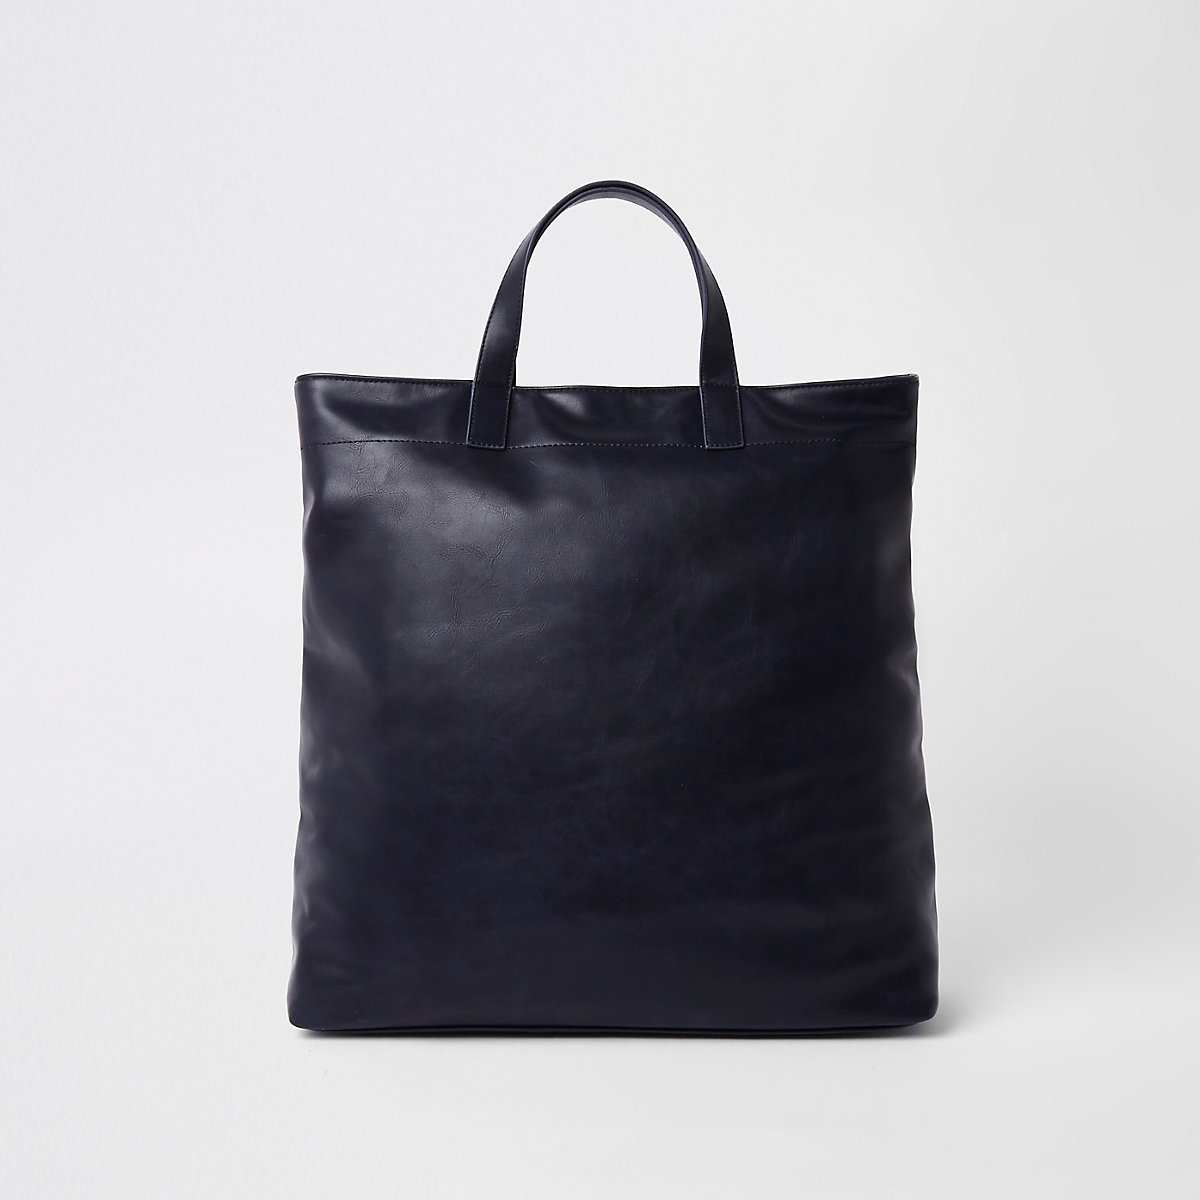 Navy faux leather tote bag - Bags & Purses - Sale - women